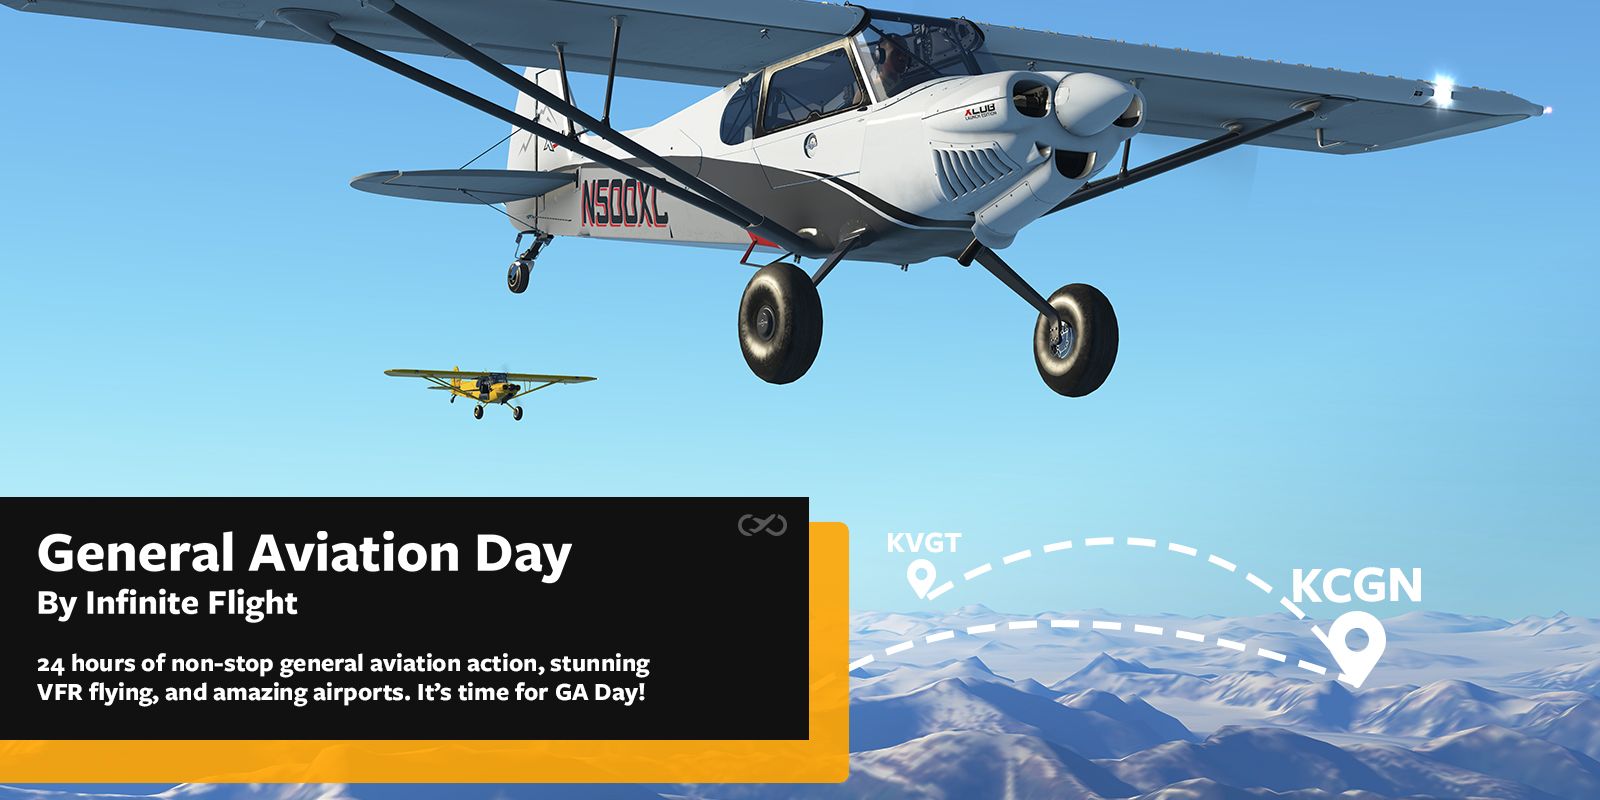 General Aviation Day by Infinite Flight